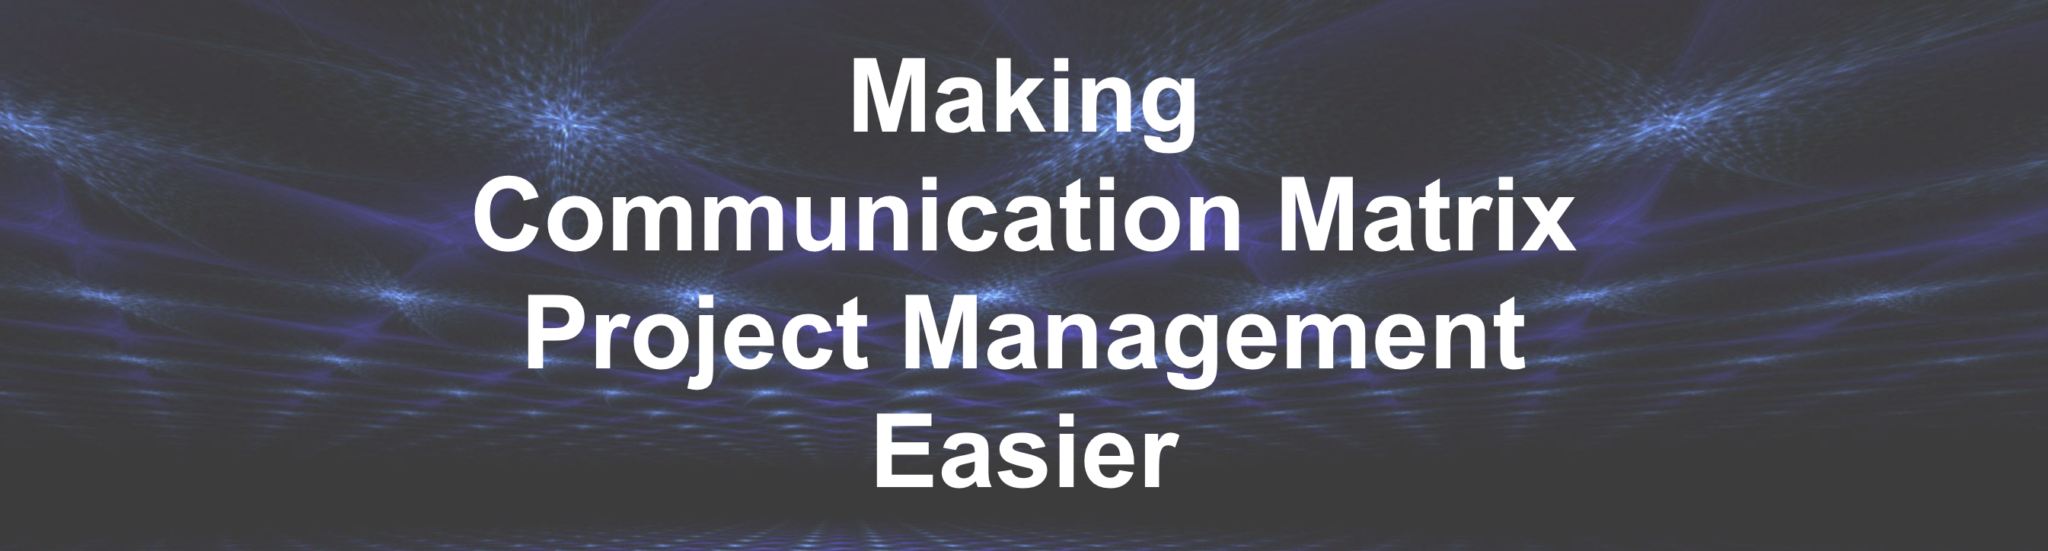 Making Communication Matrix Project Management Easier